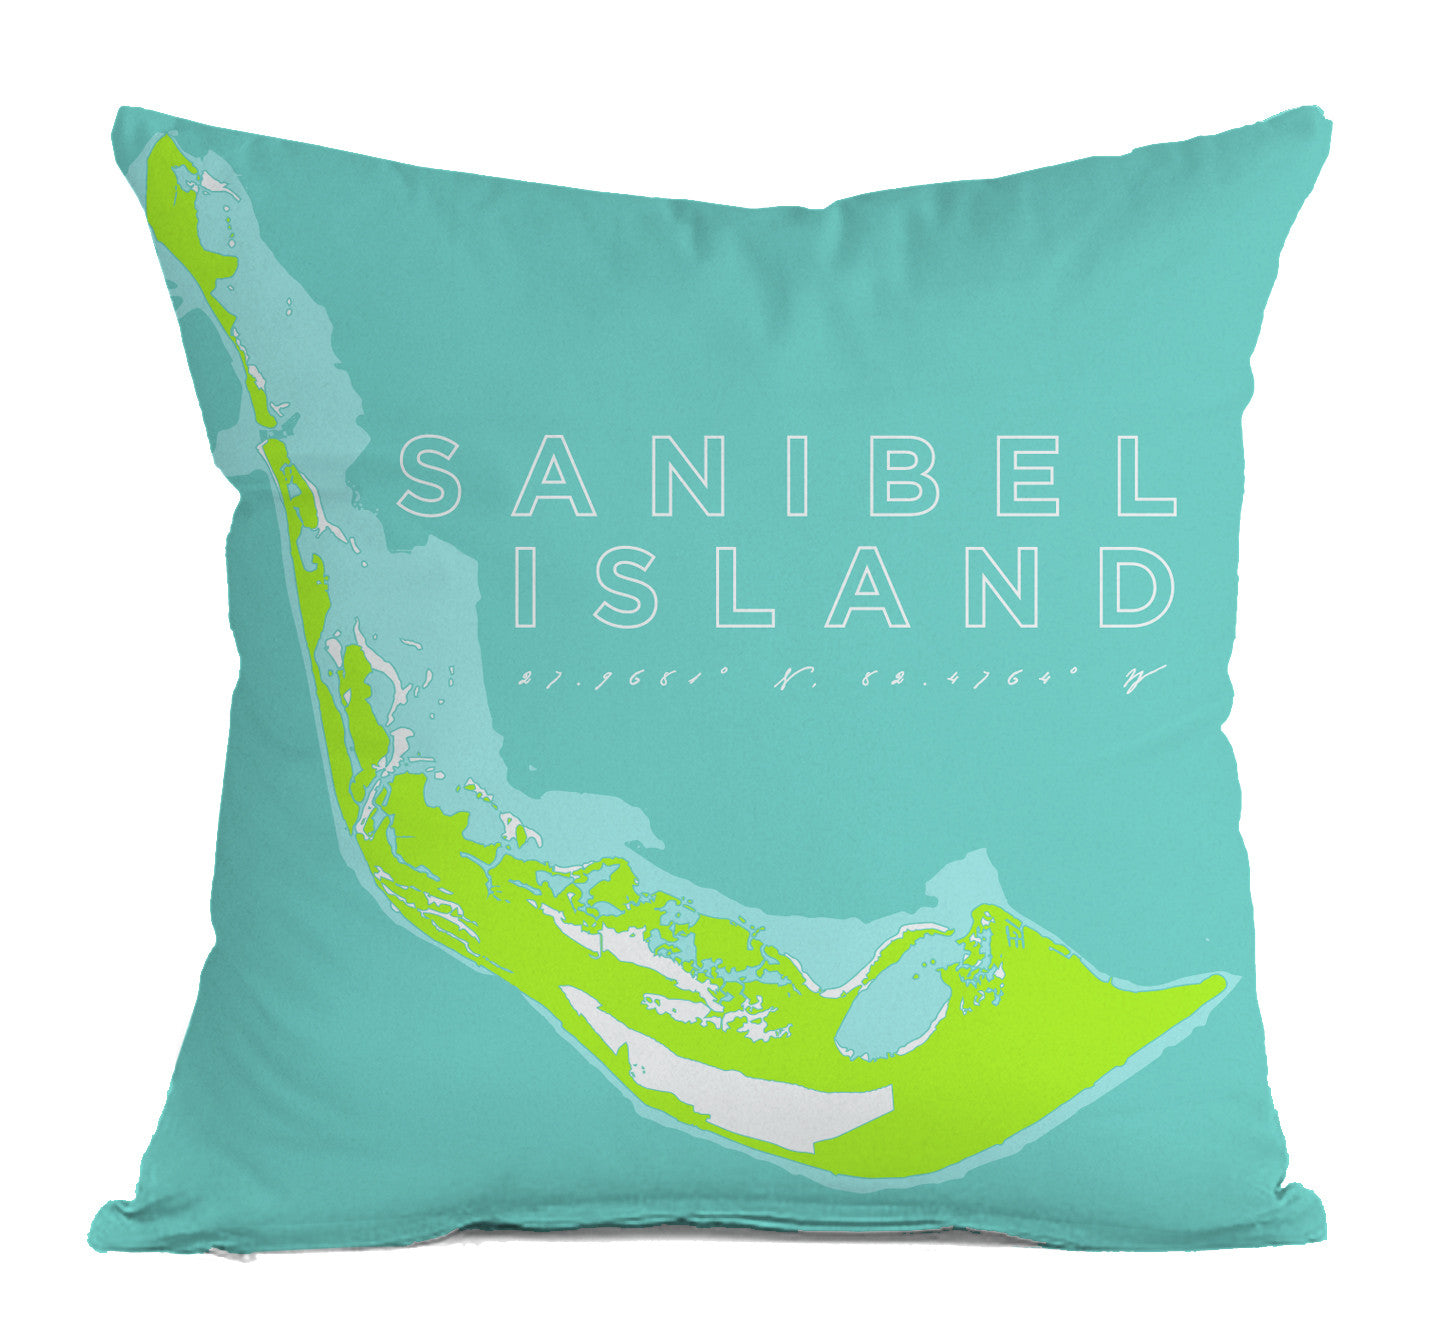 Sanibel Island Indoor/Outdoor Decorative Throw Pillow, Aqua & Spring Green